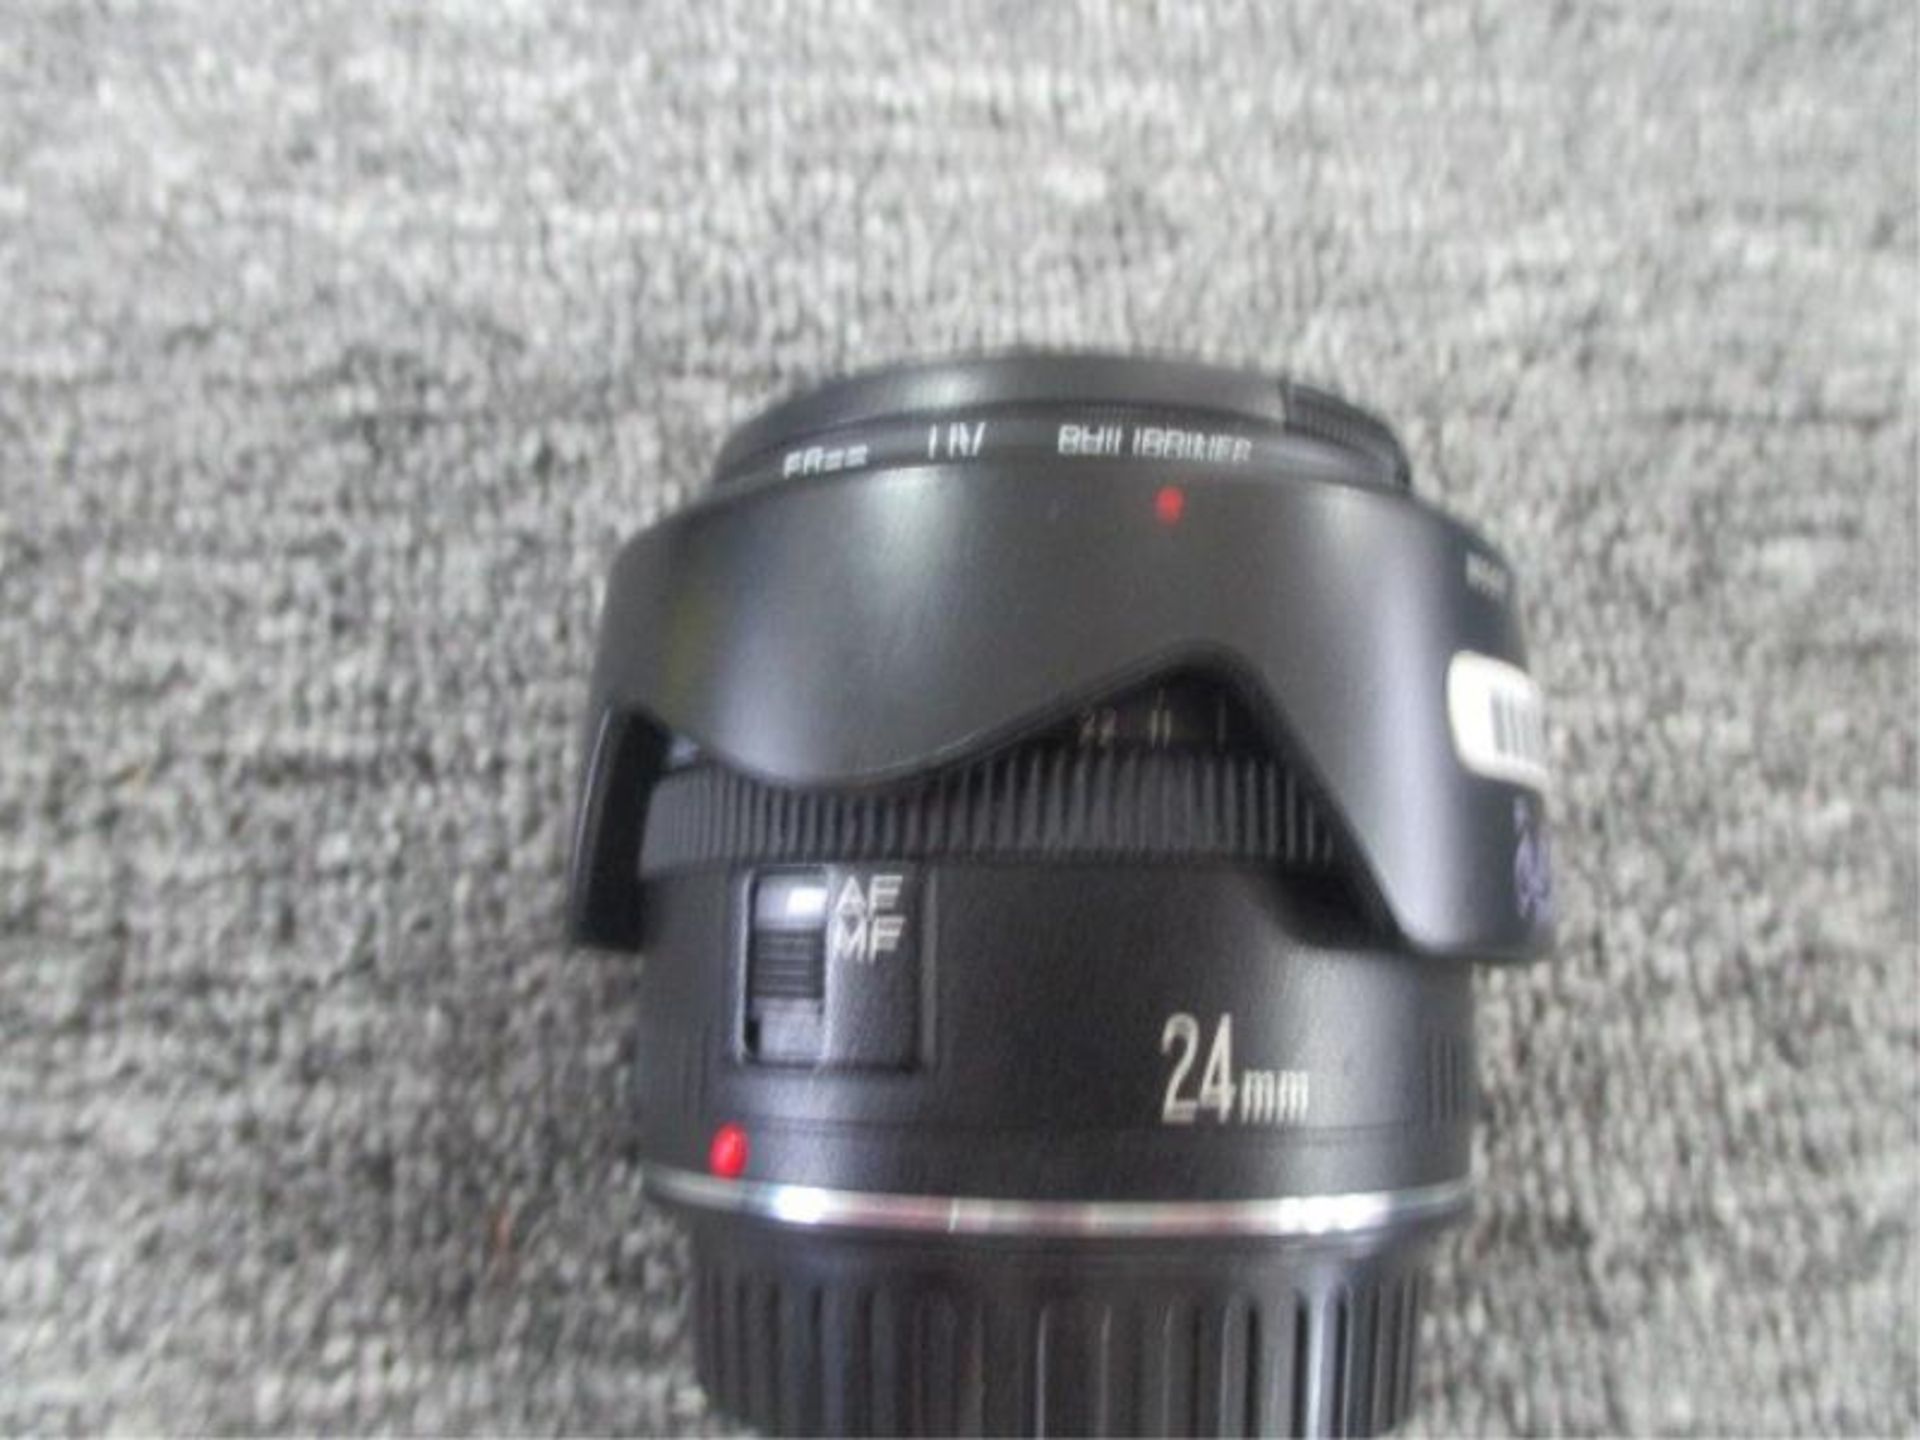 Canon EF 24mm f/2.8 Lens